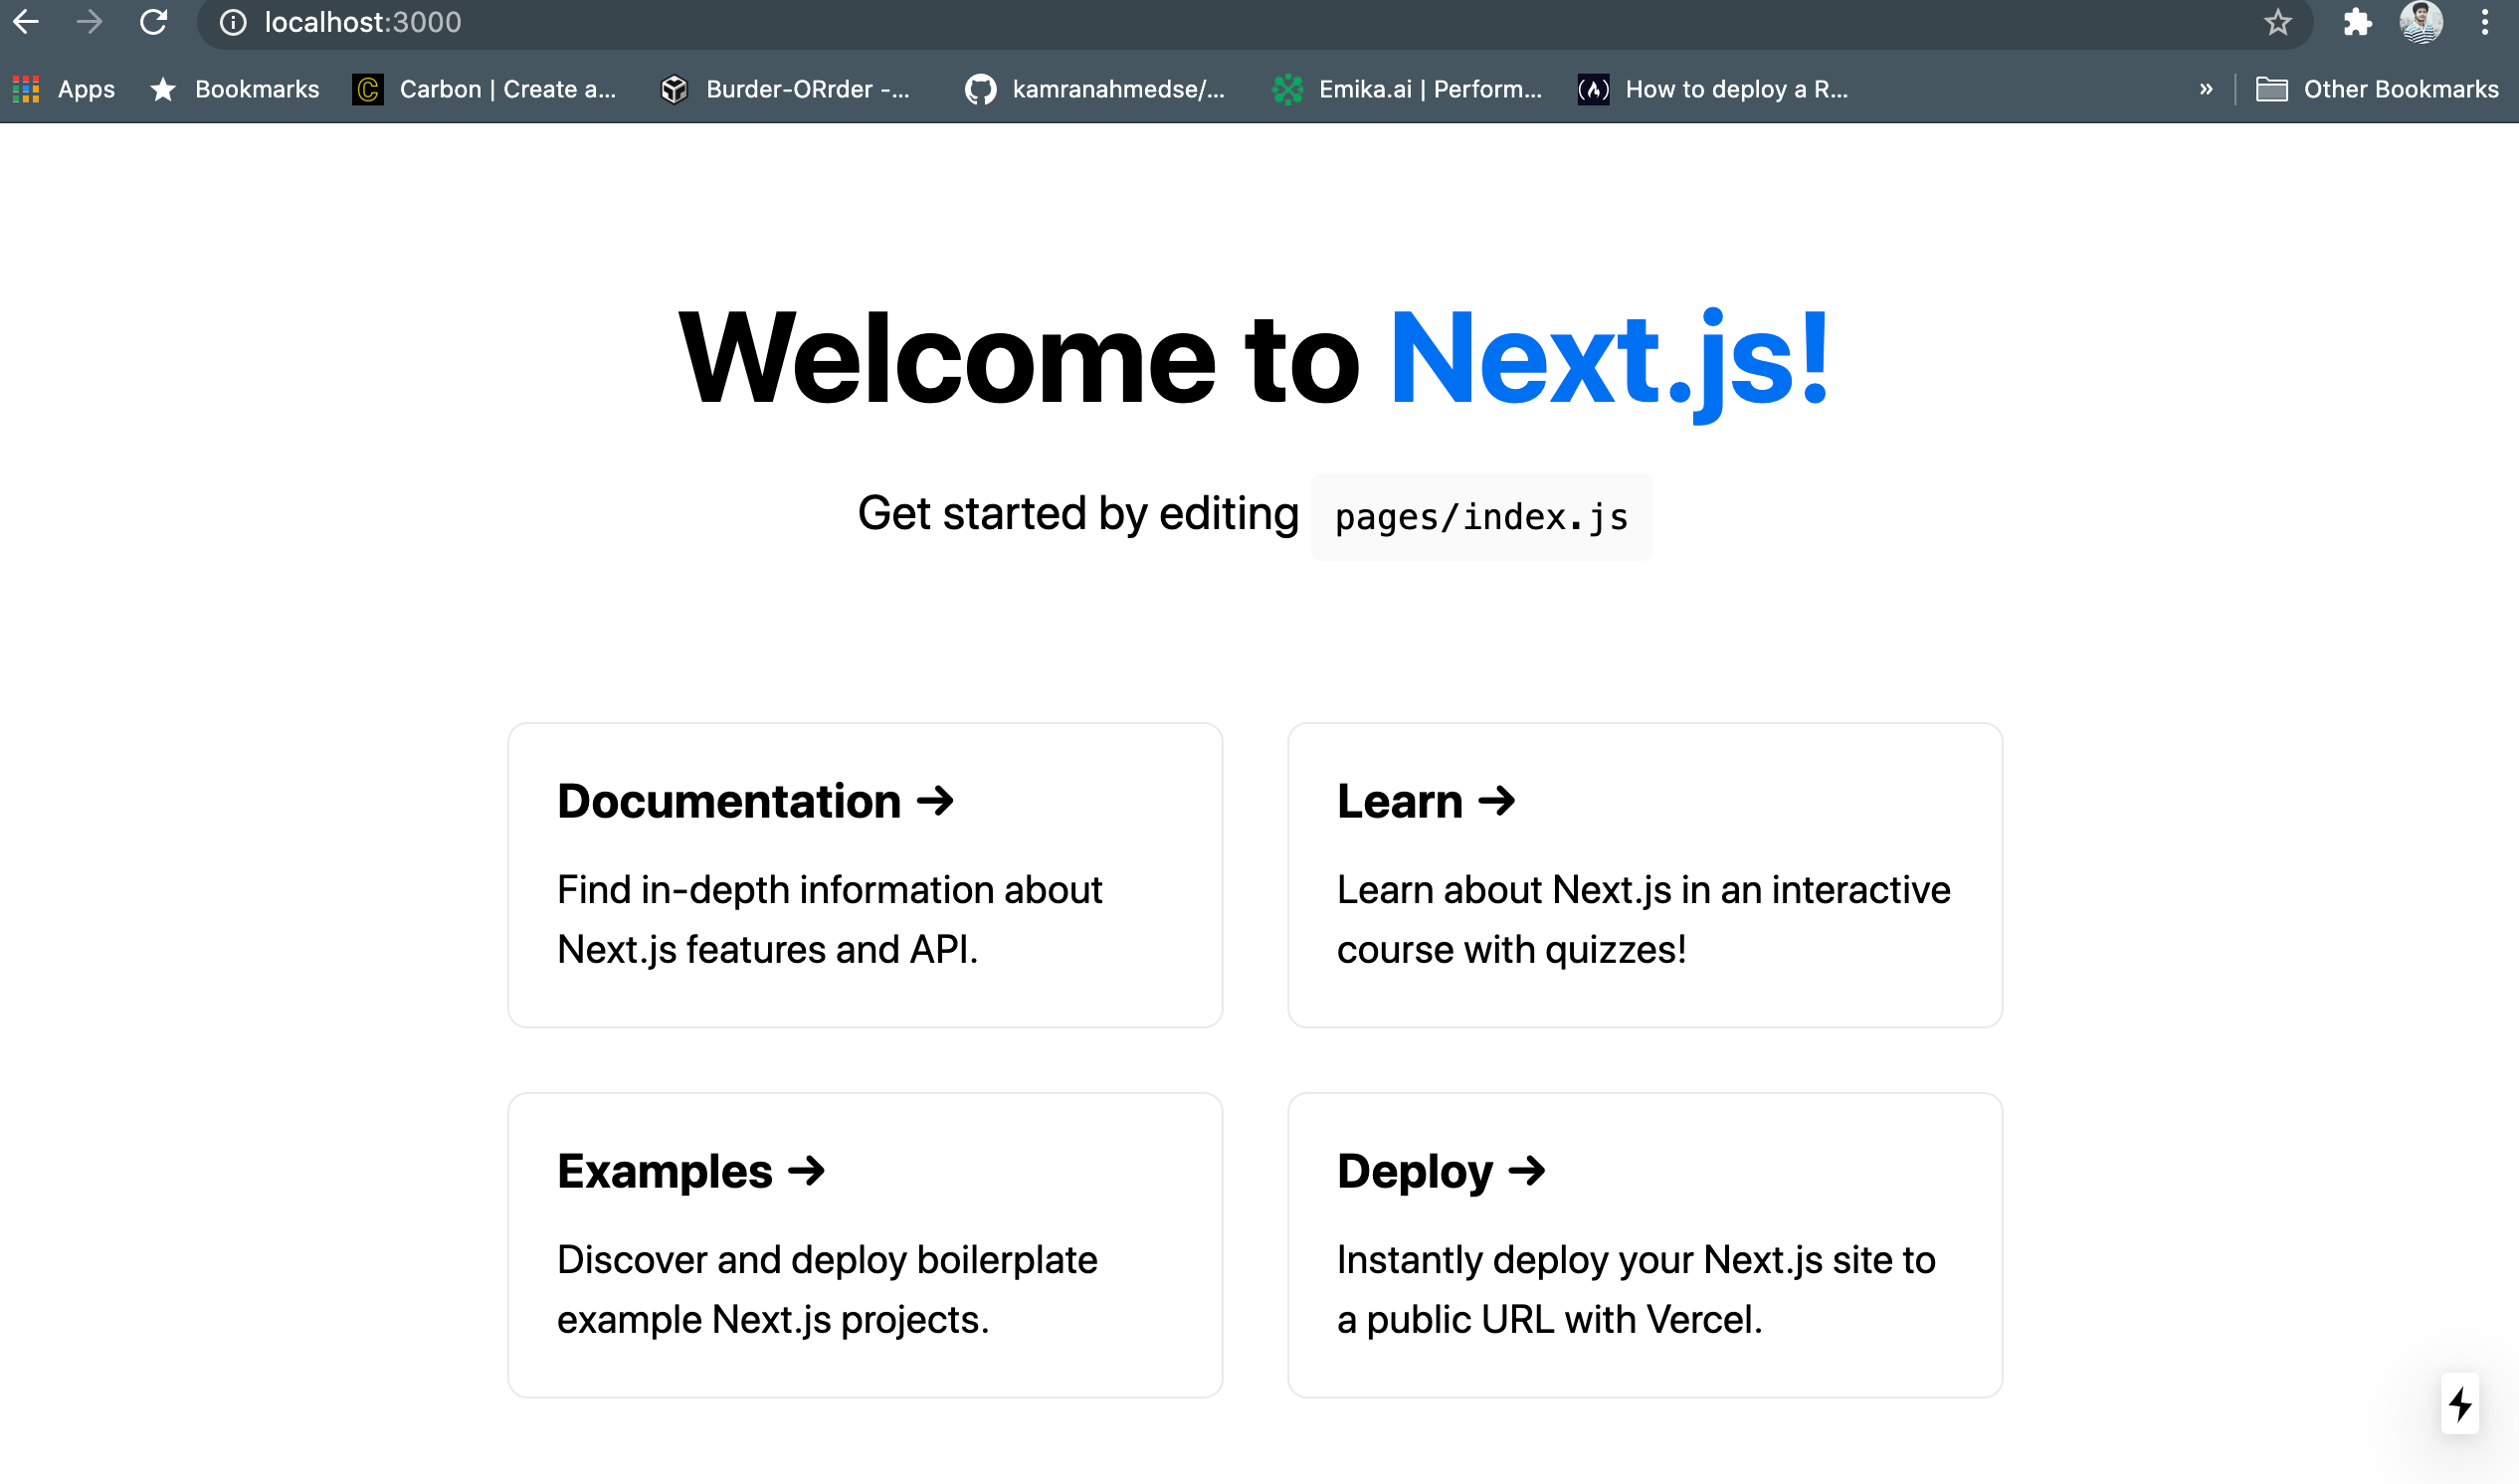 Landing page of Next.js application